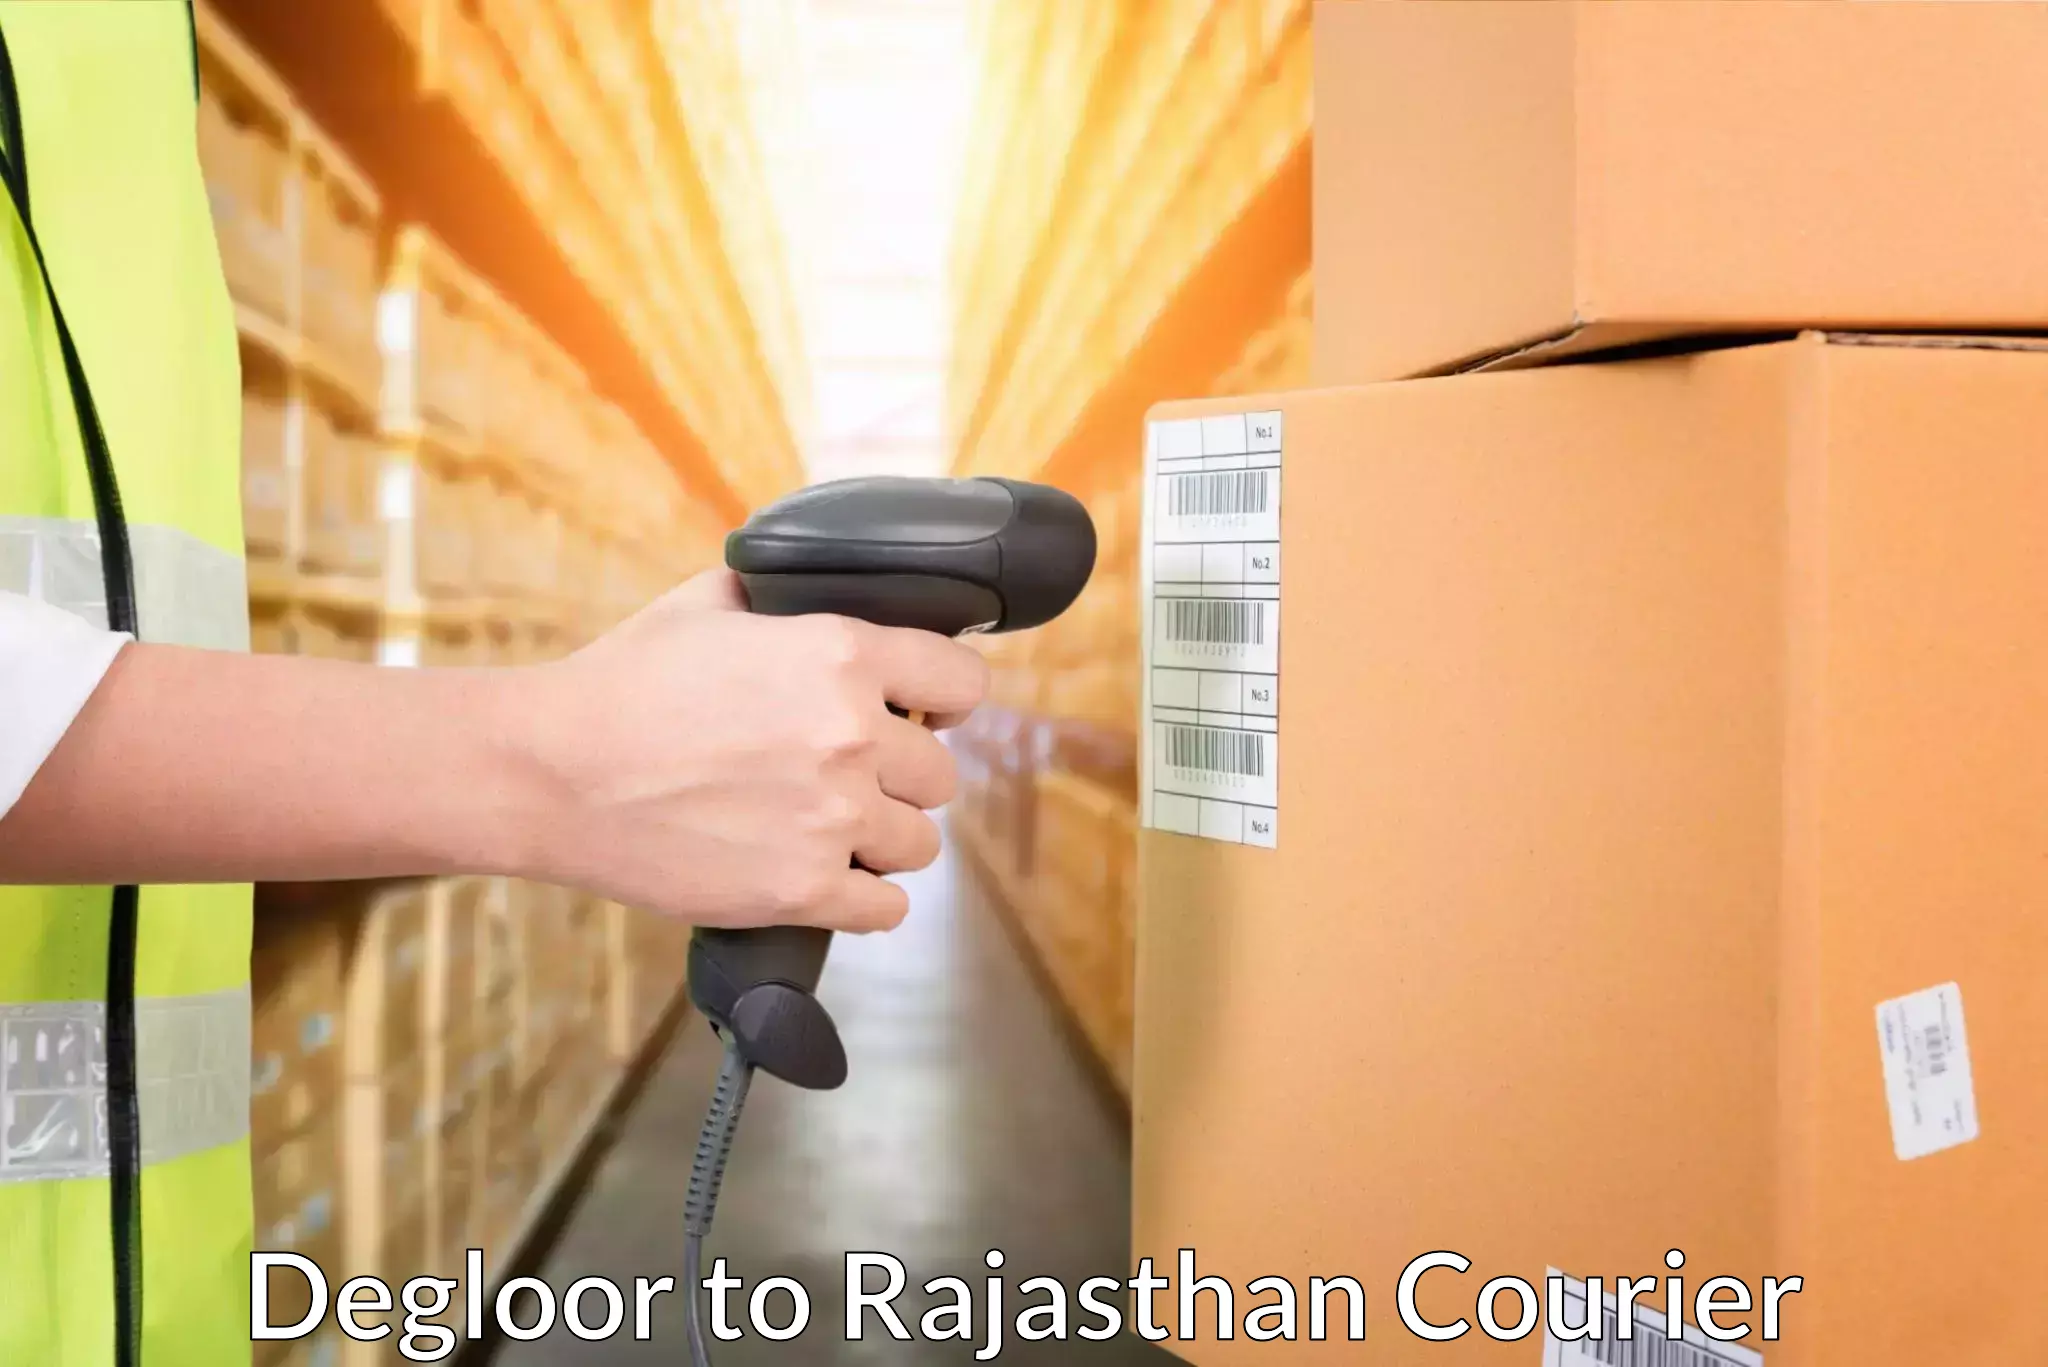 Online package tracking Degloor to Rajasthan